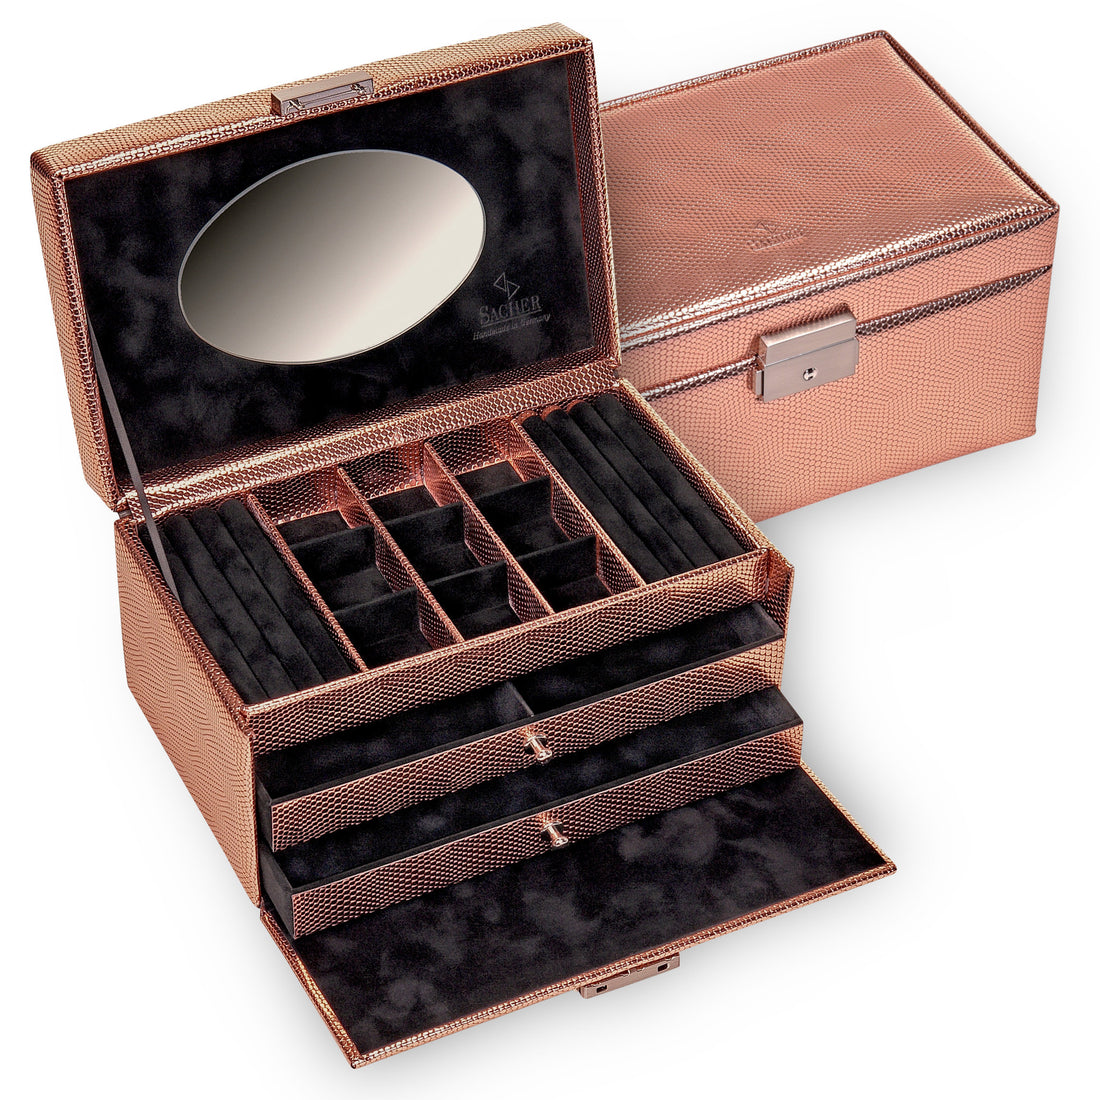 jewellery case Elly lagarto / rose gold – Manufaktur SACHER 1846 |  Offizieller Store